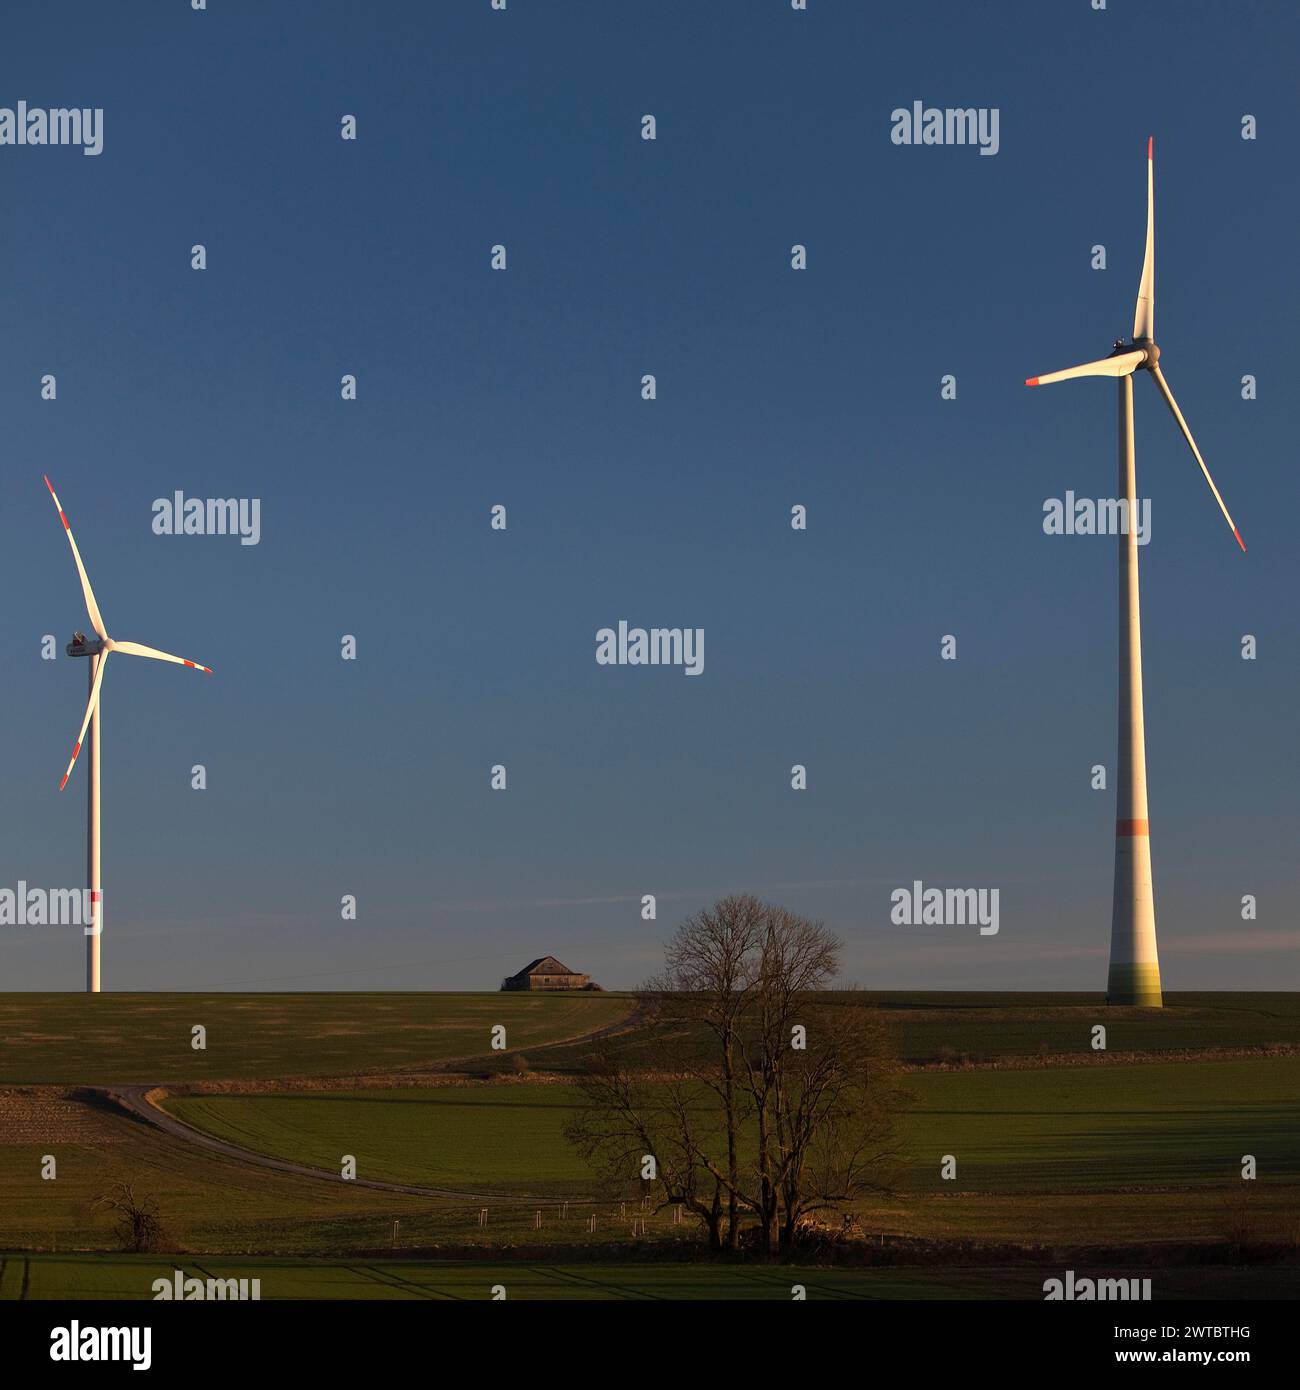 Wind turbines, wind farm, Bad Wuennenberg, Paderborn plateau, North Rhine-Westphalia, Germany Stock Photo